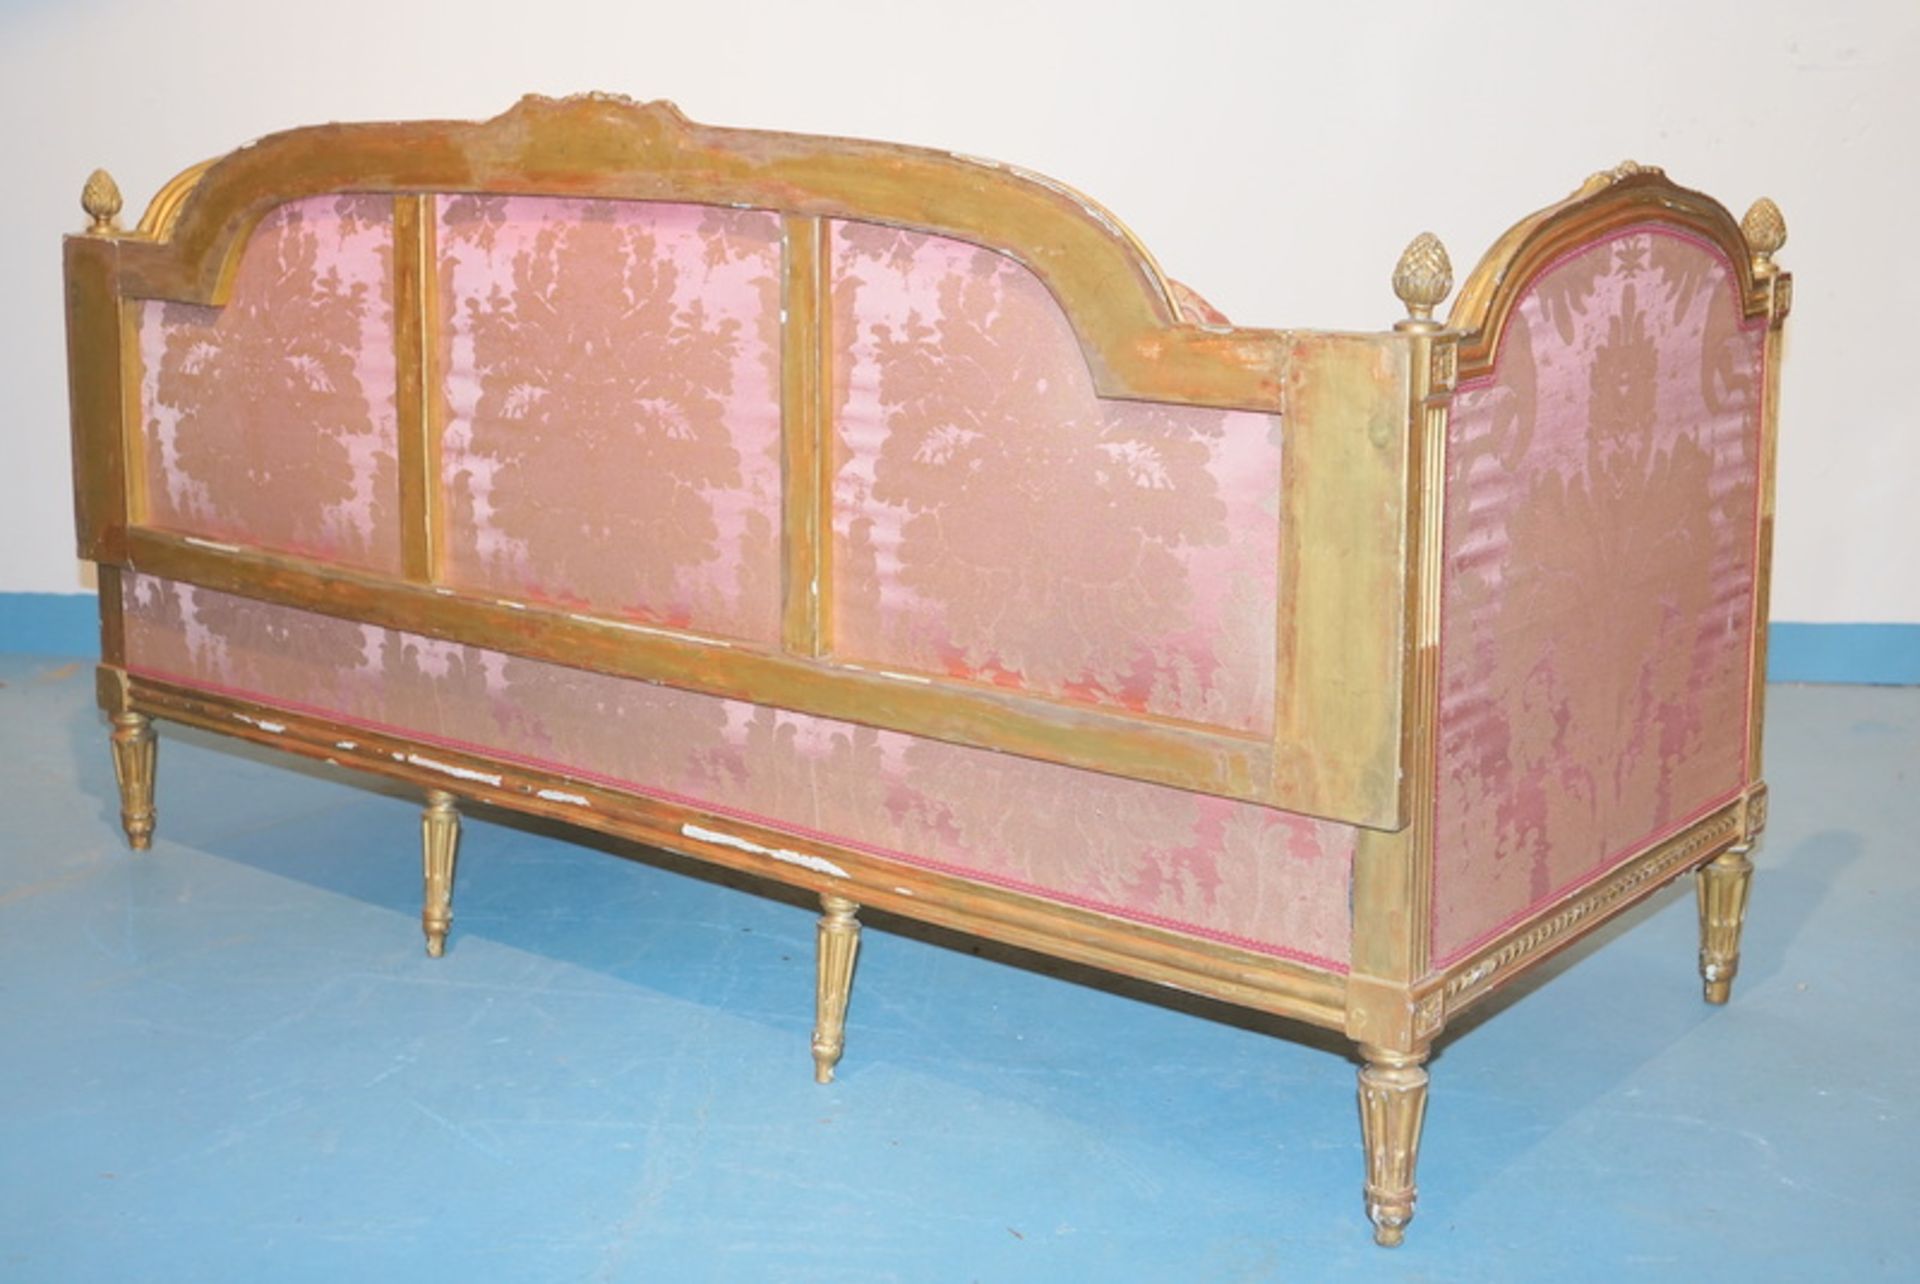 Großes Sofa, Lit du Jour, Louis Seize Stil, 19.Jhd. - Image 7 of 7